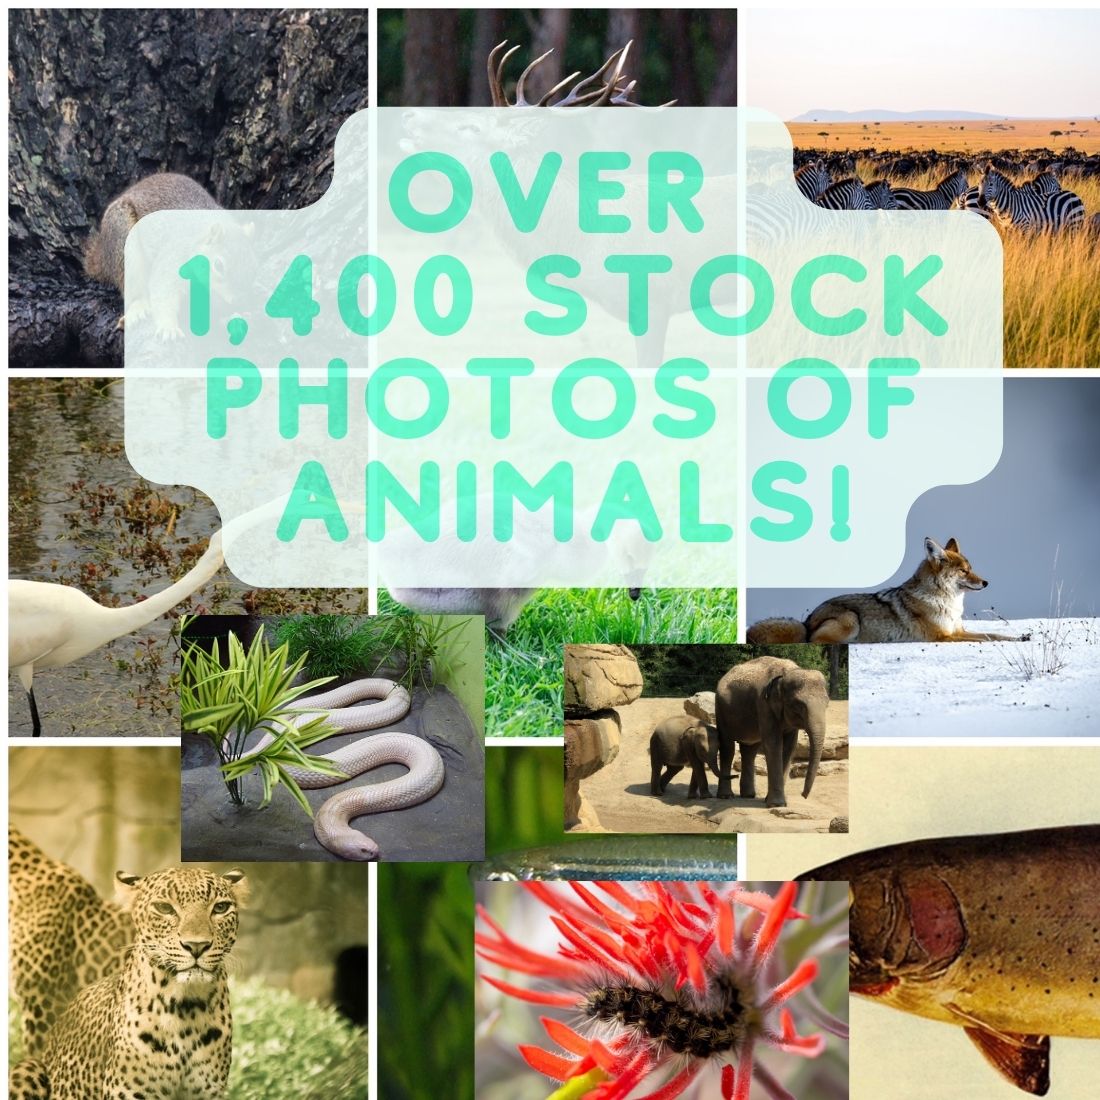 1,400 Stock Photo Bundle Of Animals cover image.